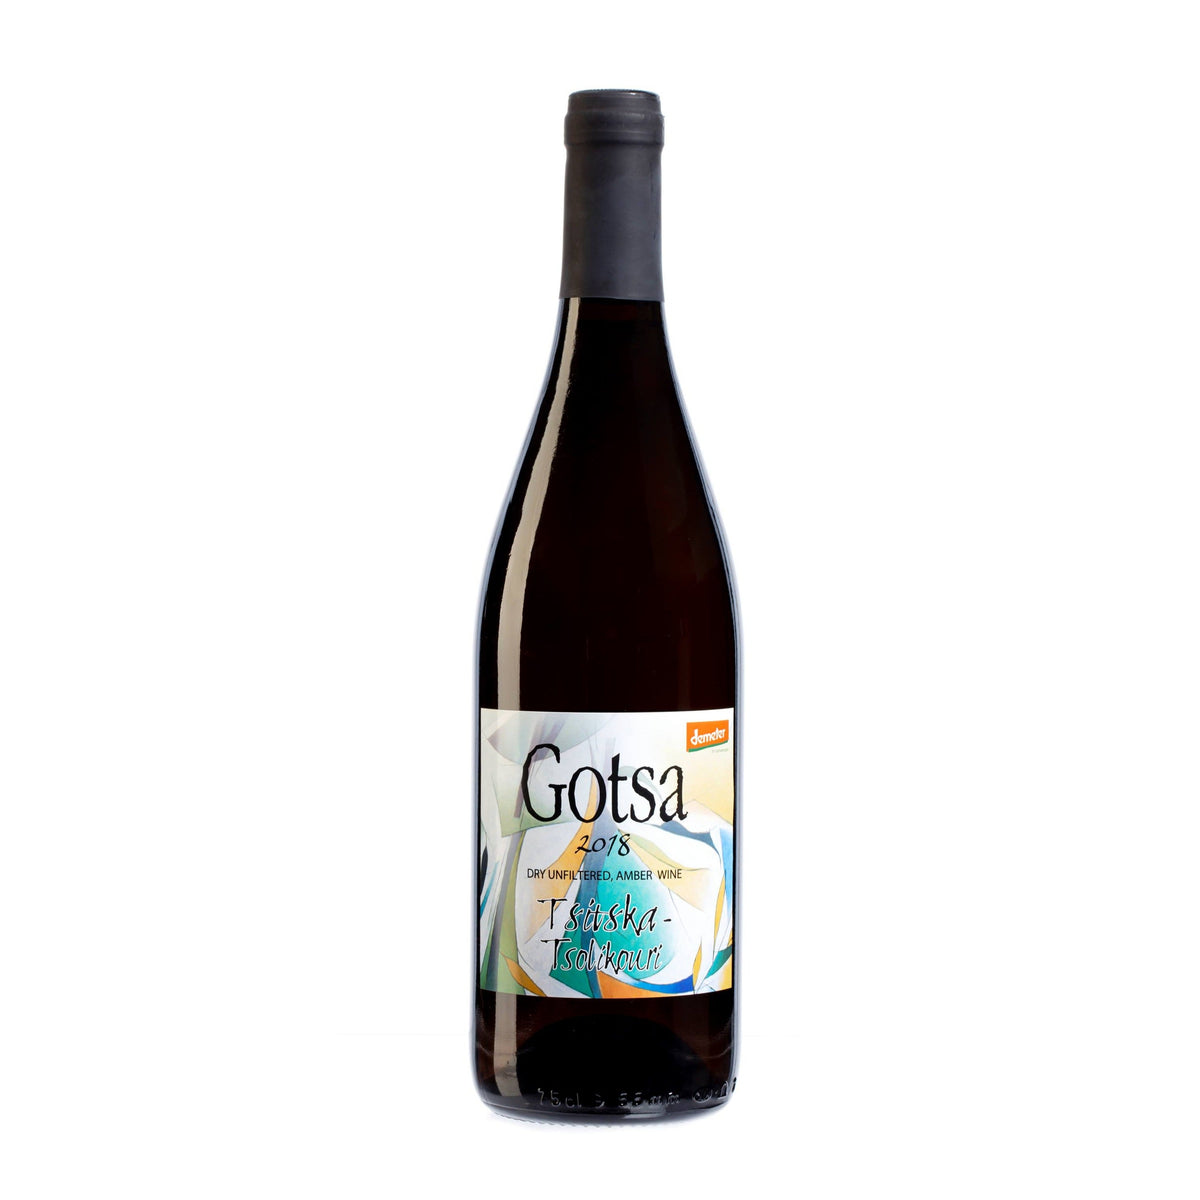 Tsitska-Tsolikouri 2019 - Orange - Gotsa Wines - Le vin dans les voiles